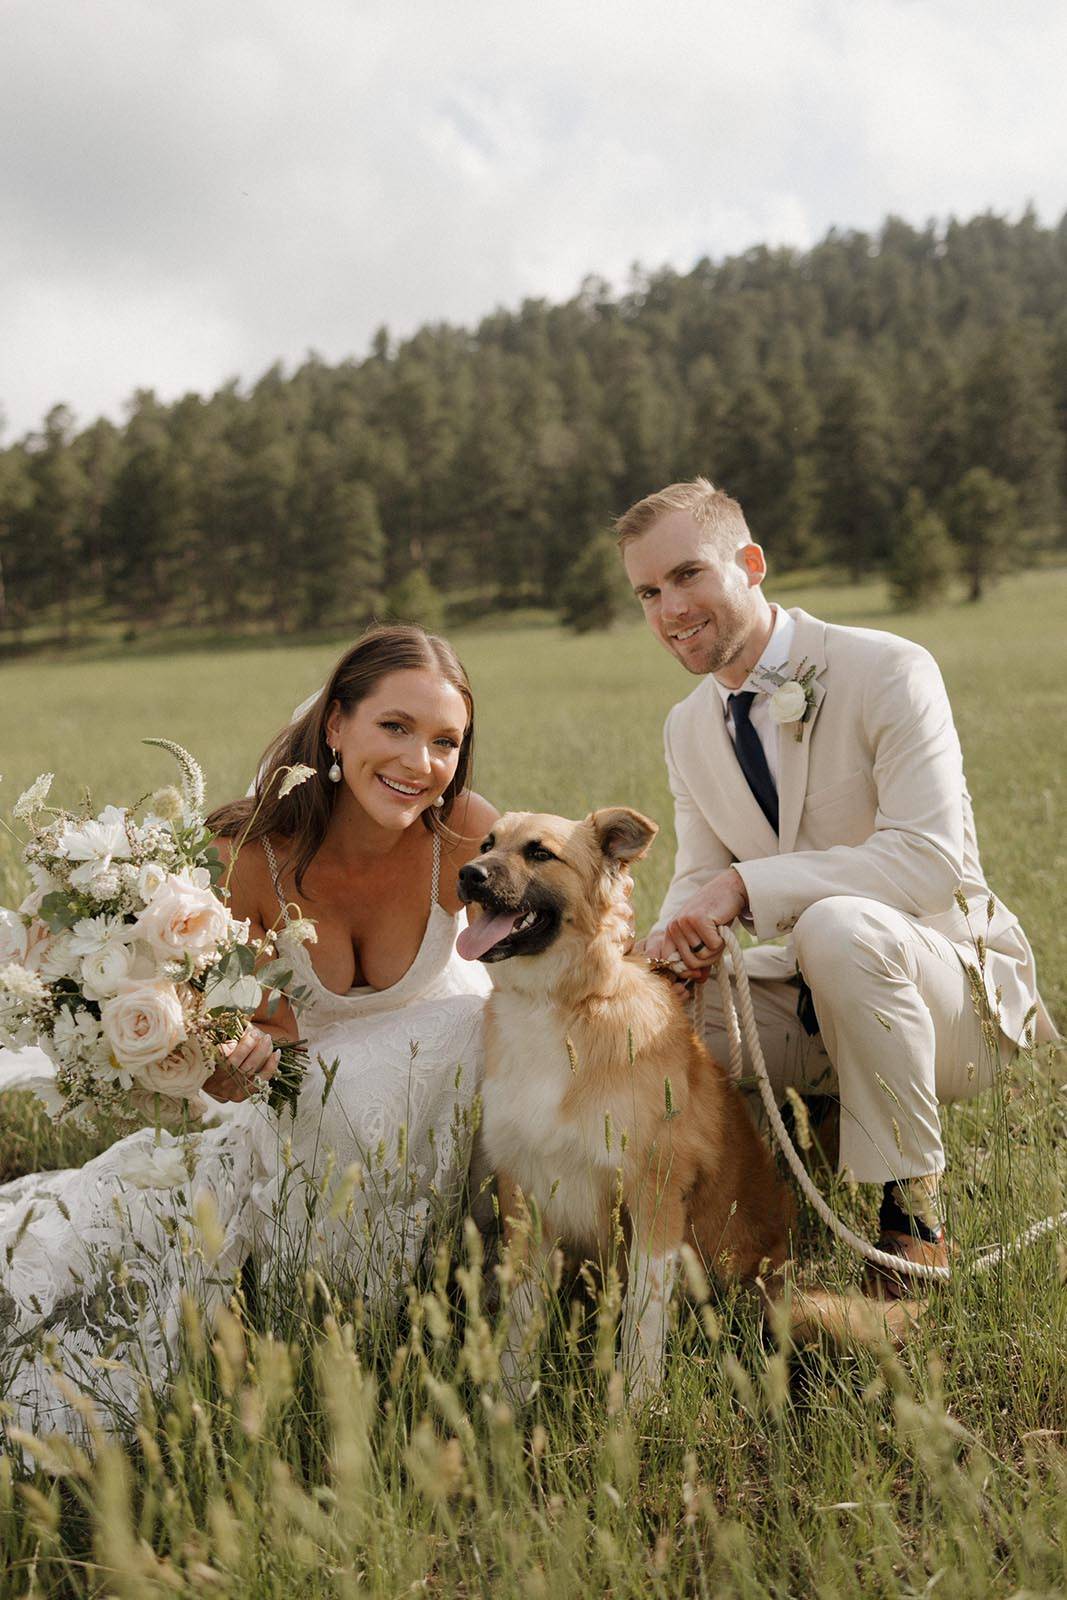 Bride and groom, alongside their lovely dog